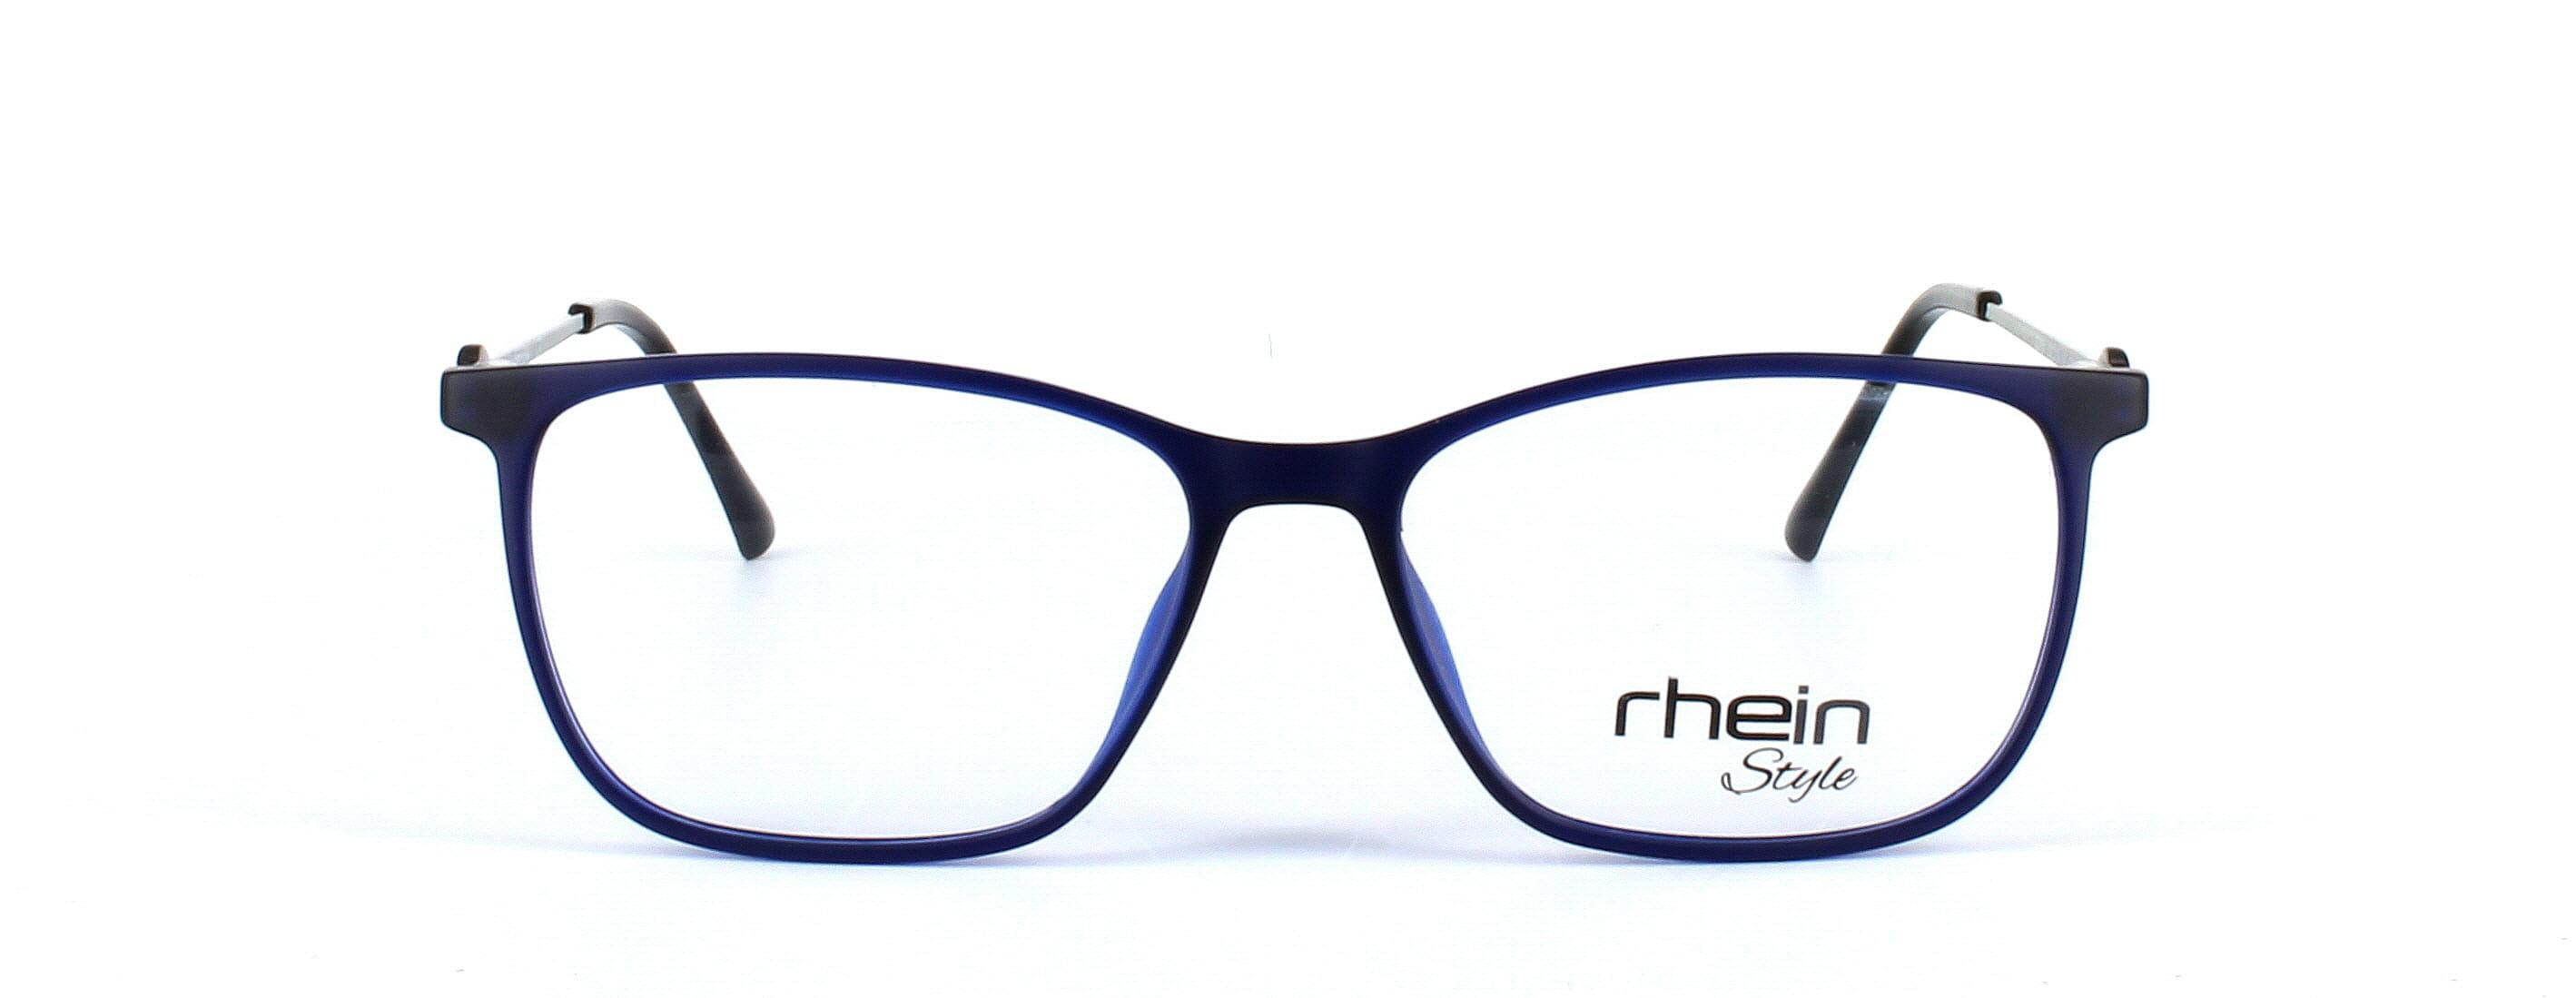 Florina - ladies acetate glasses frame in blue - image view 5